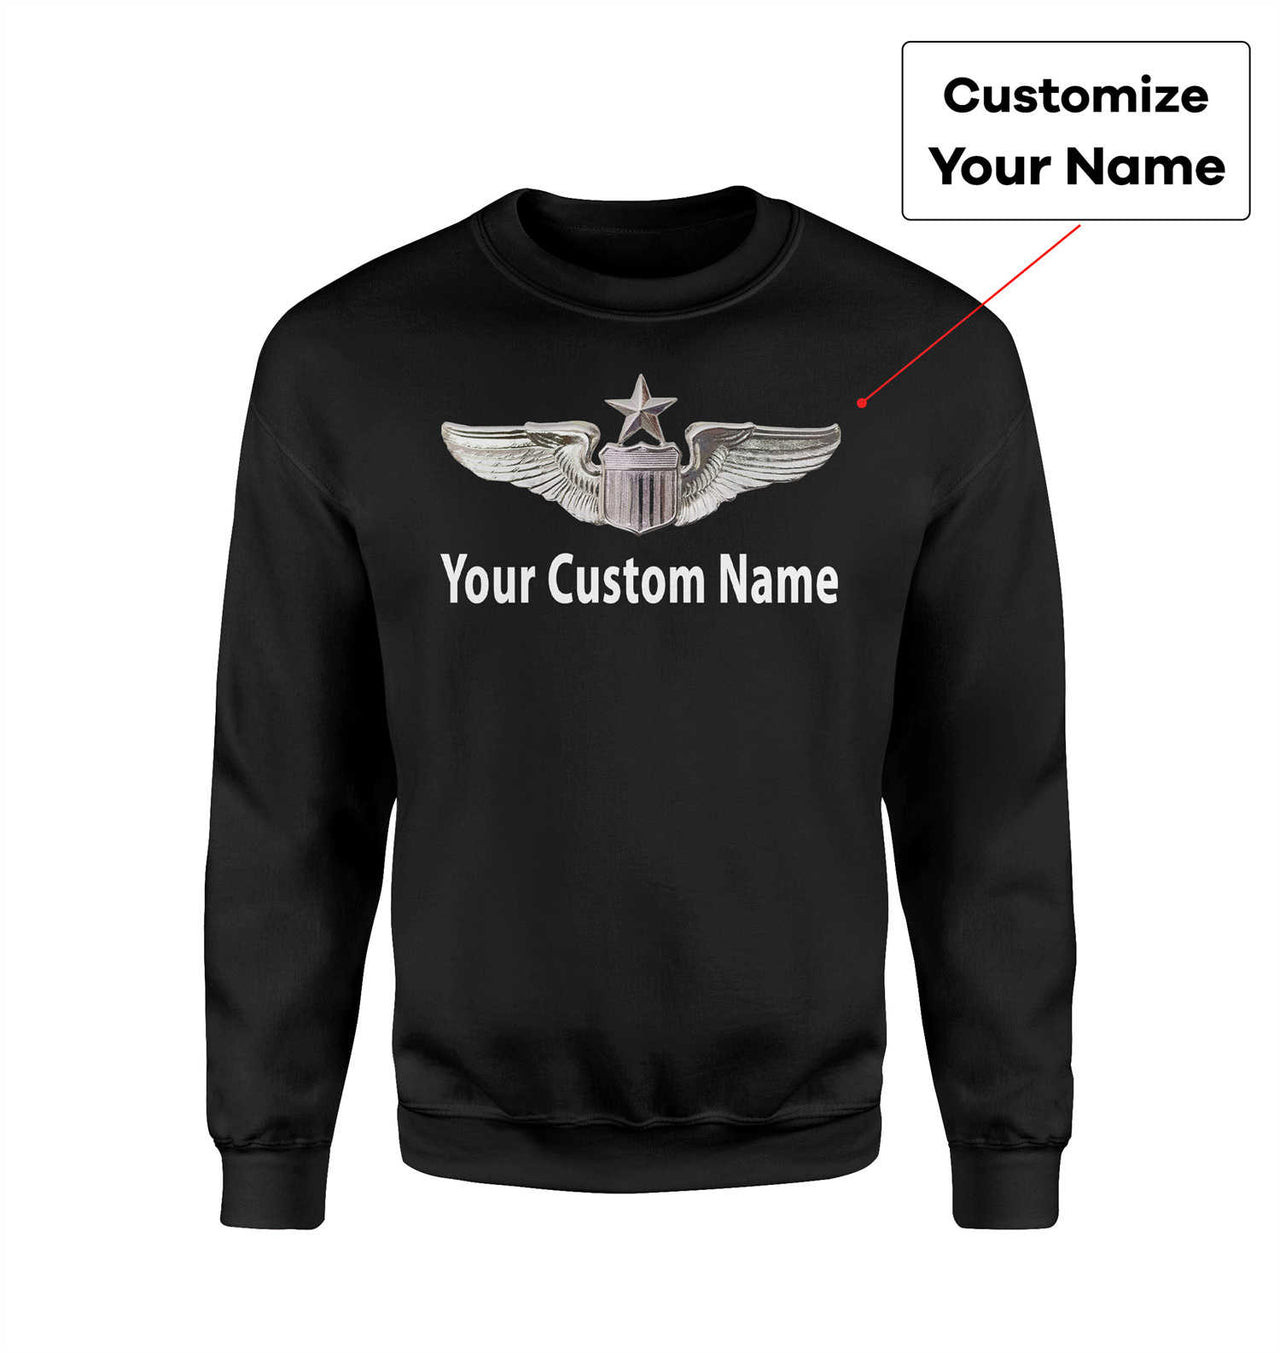 Custom Name & Big Badge (Air Force & Star) Designed 3D Sweatshirts